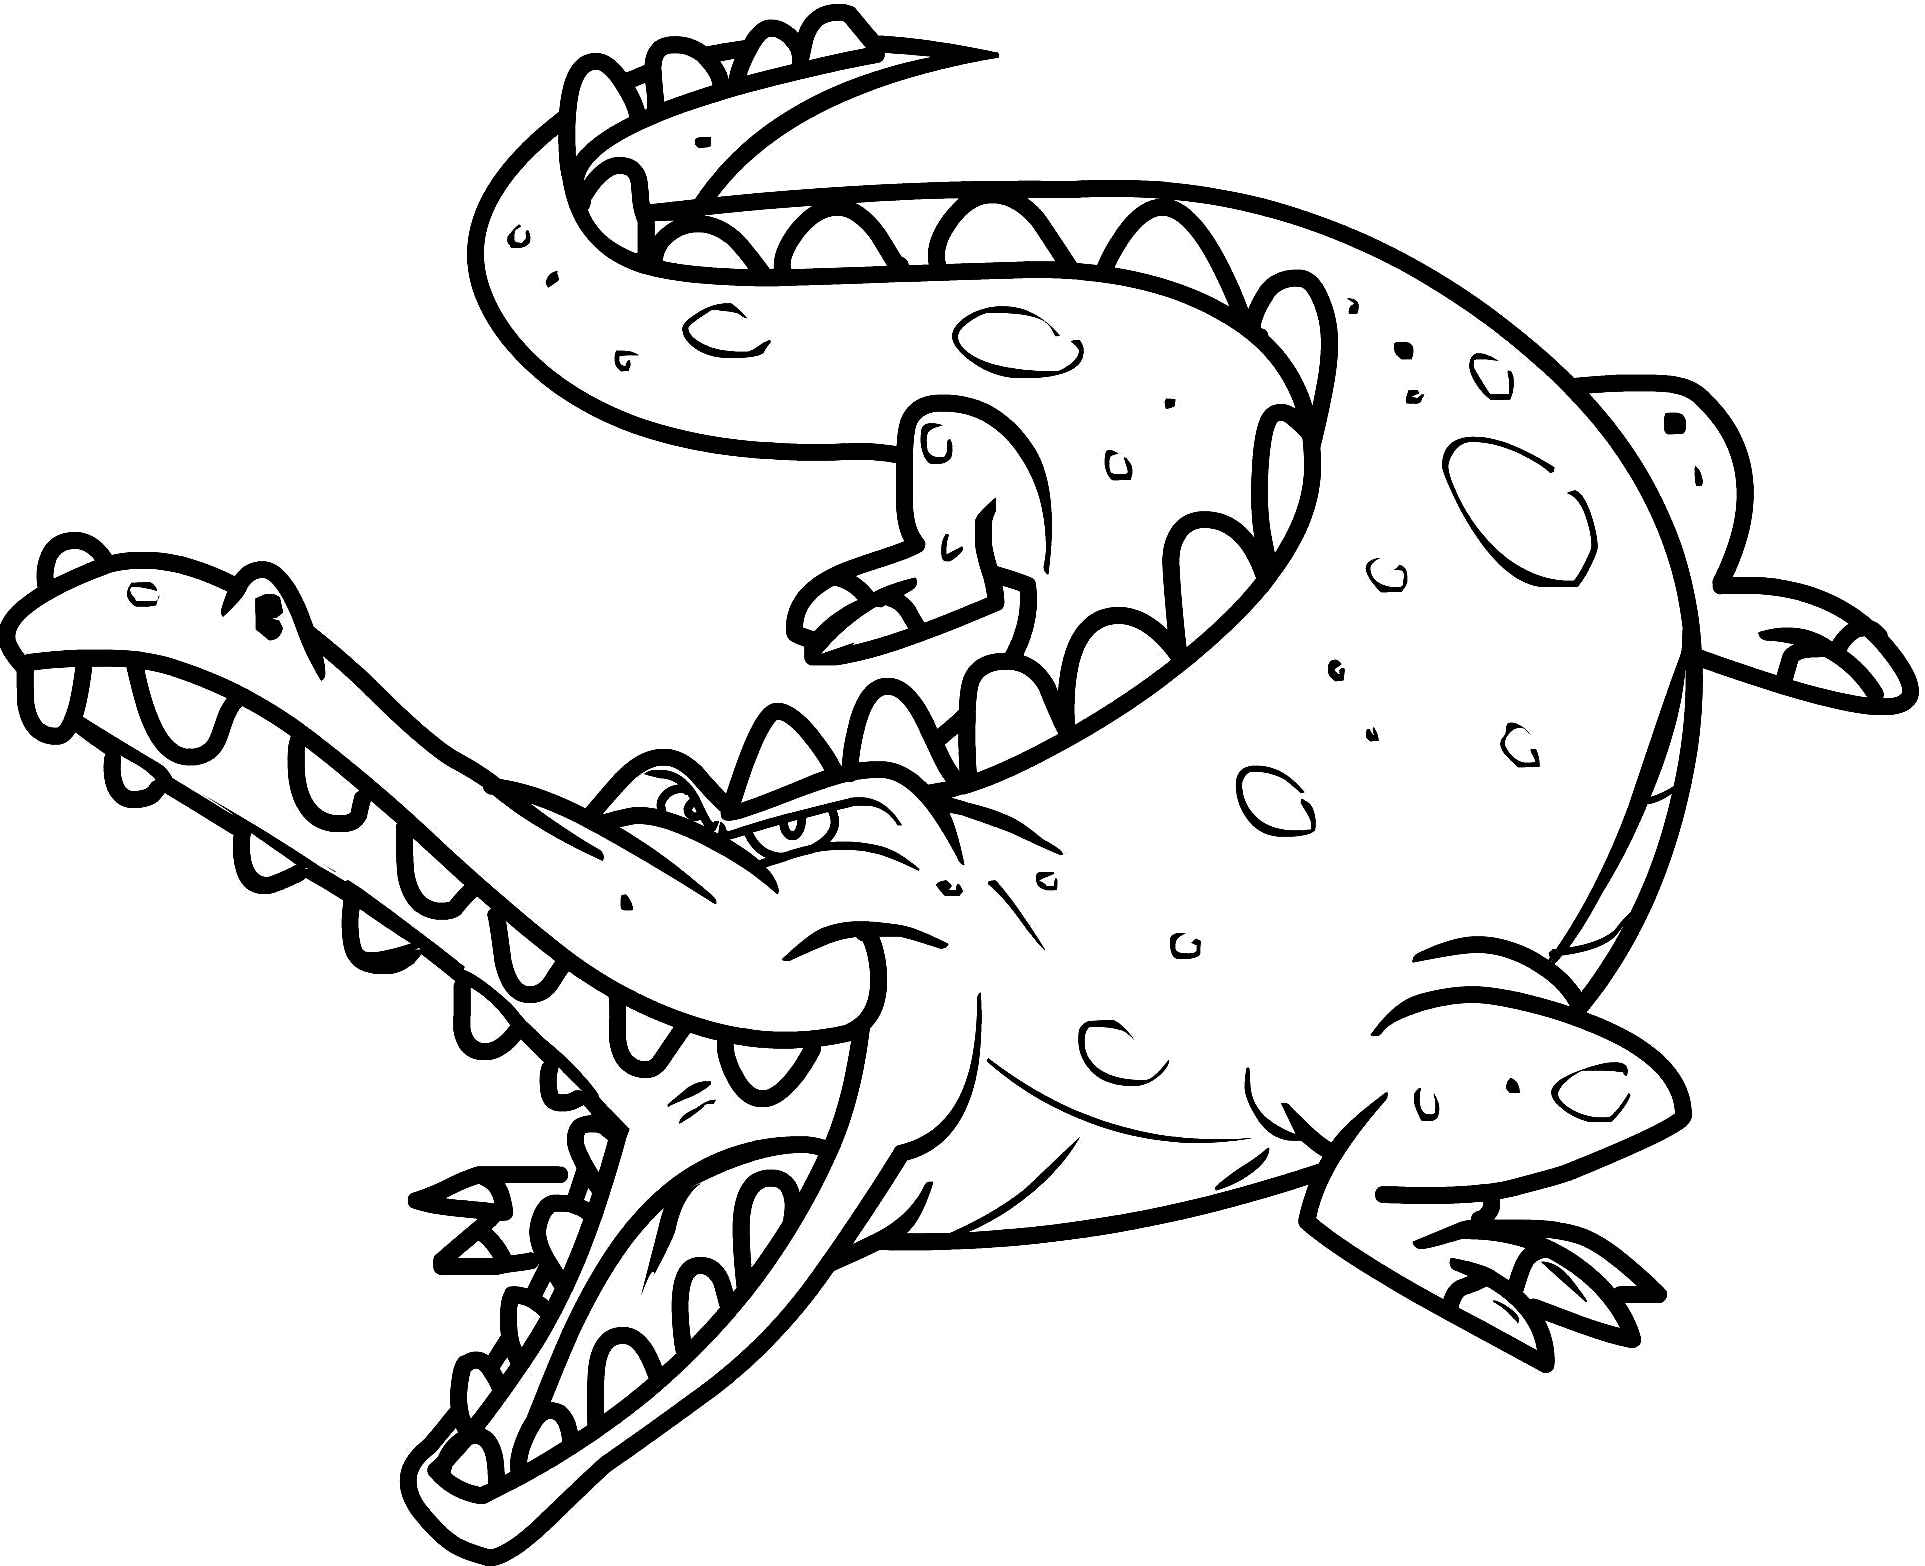 Desenho 11 de crocodilos para imprimir e colorir